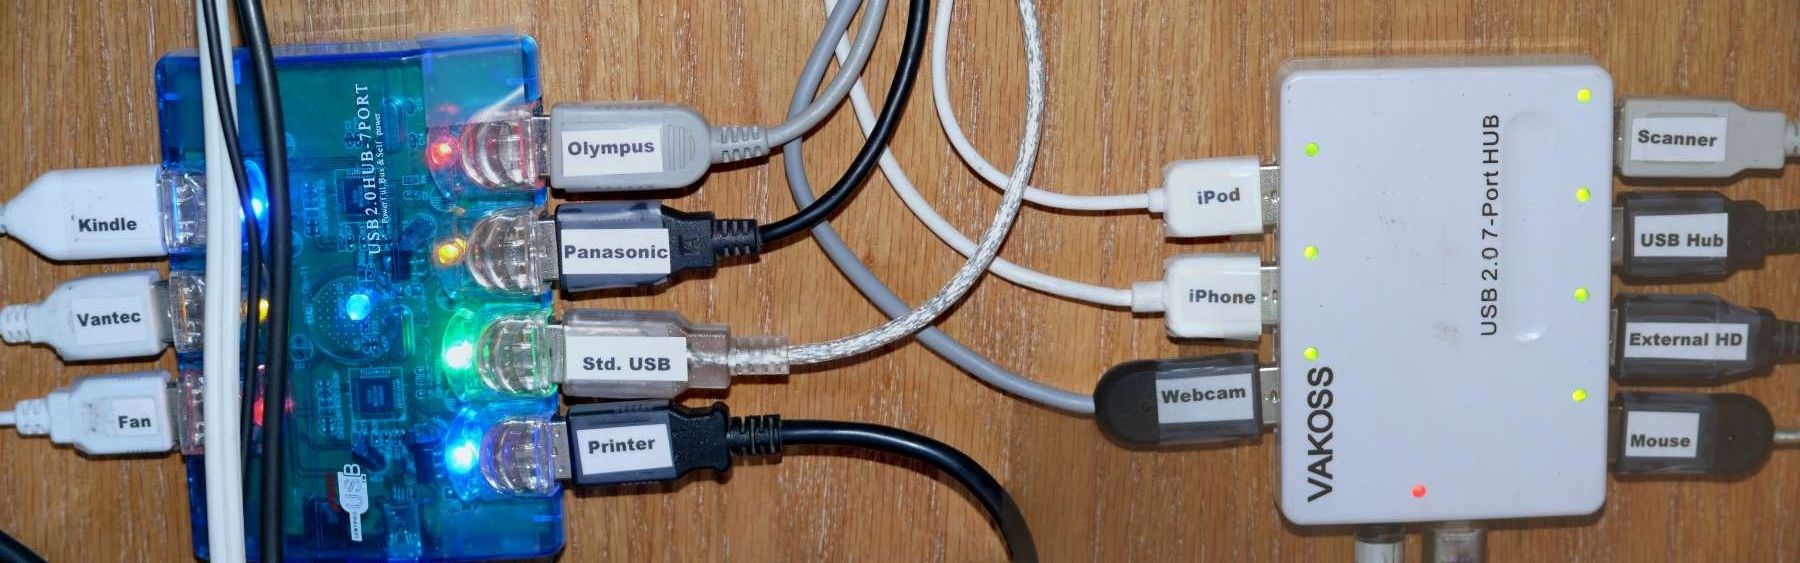 USB Hubs-W1800 Edited.jpg